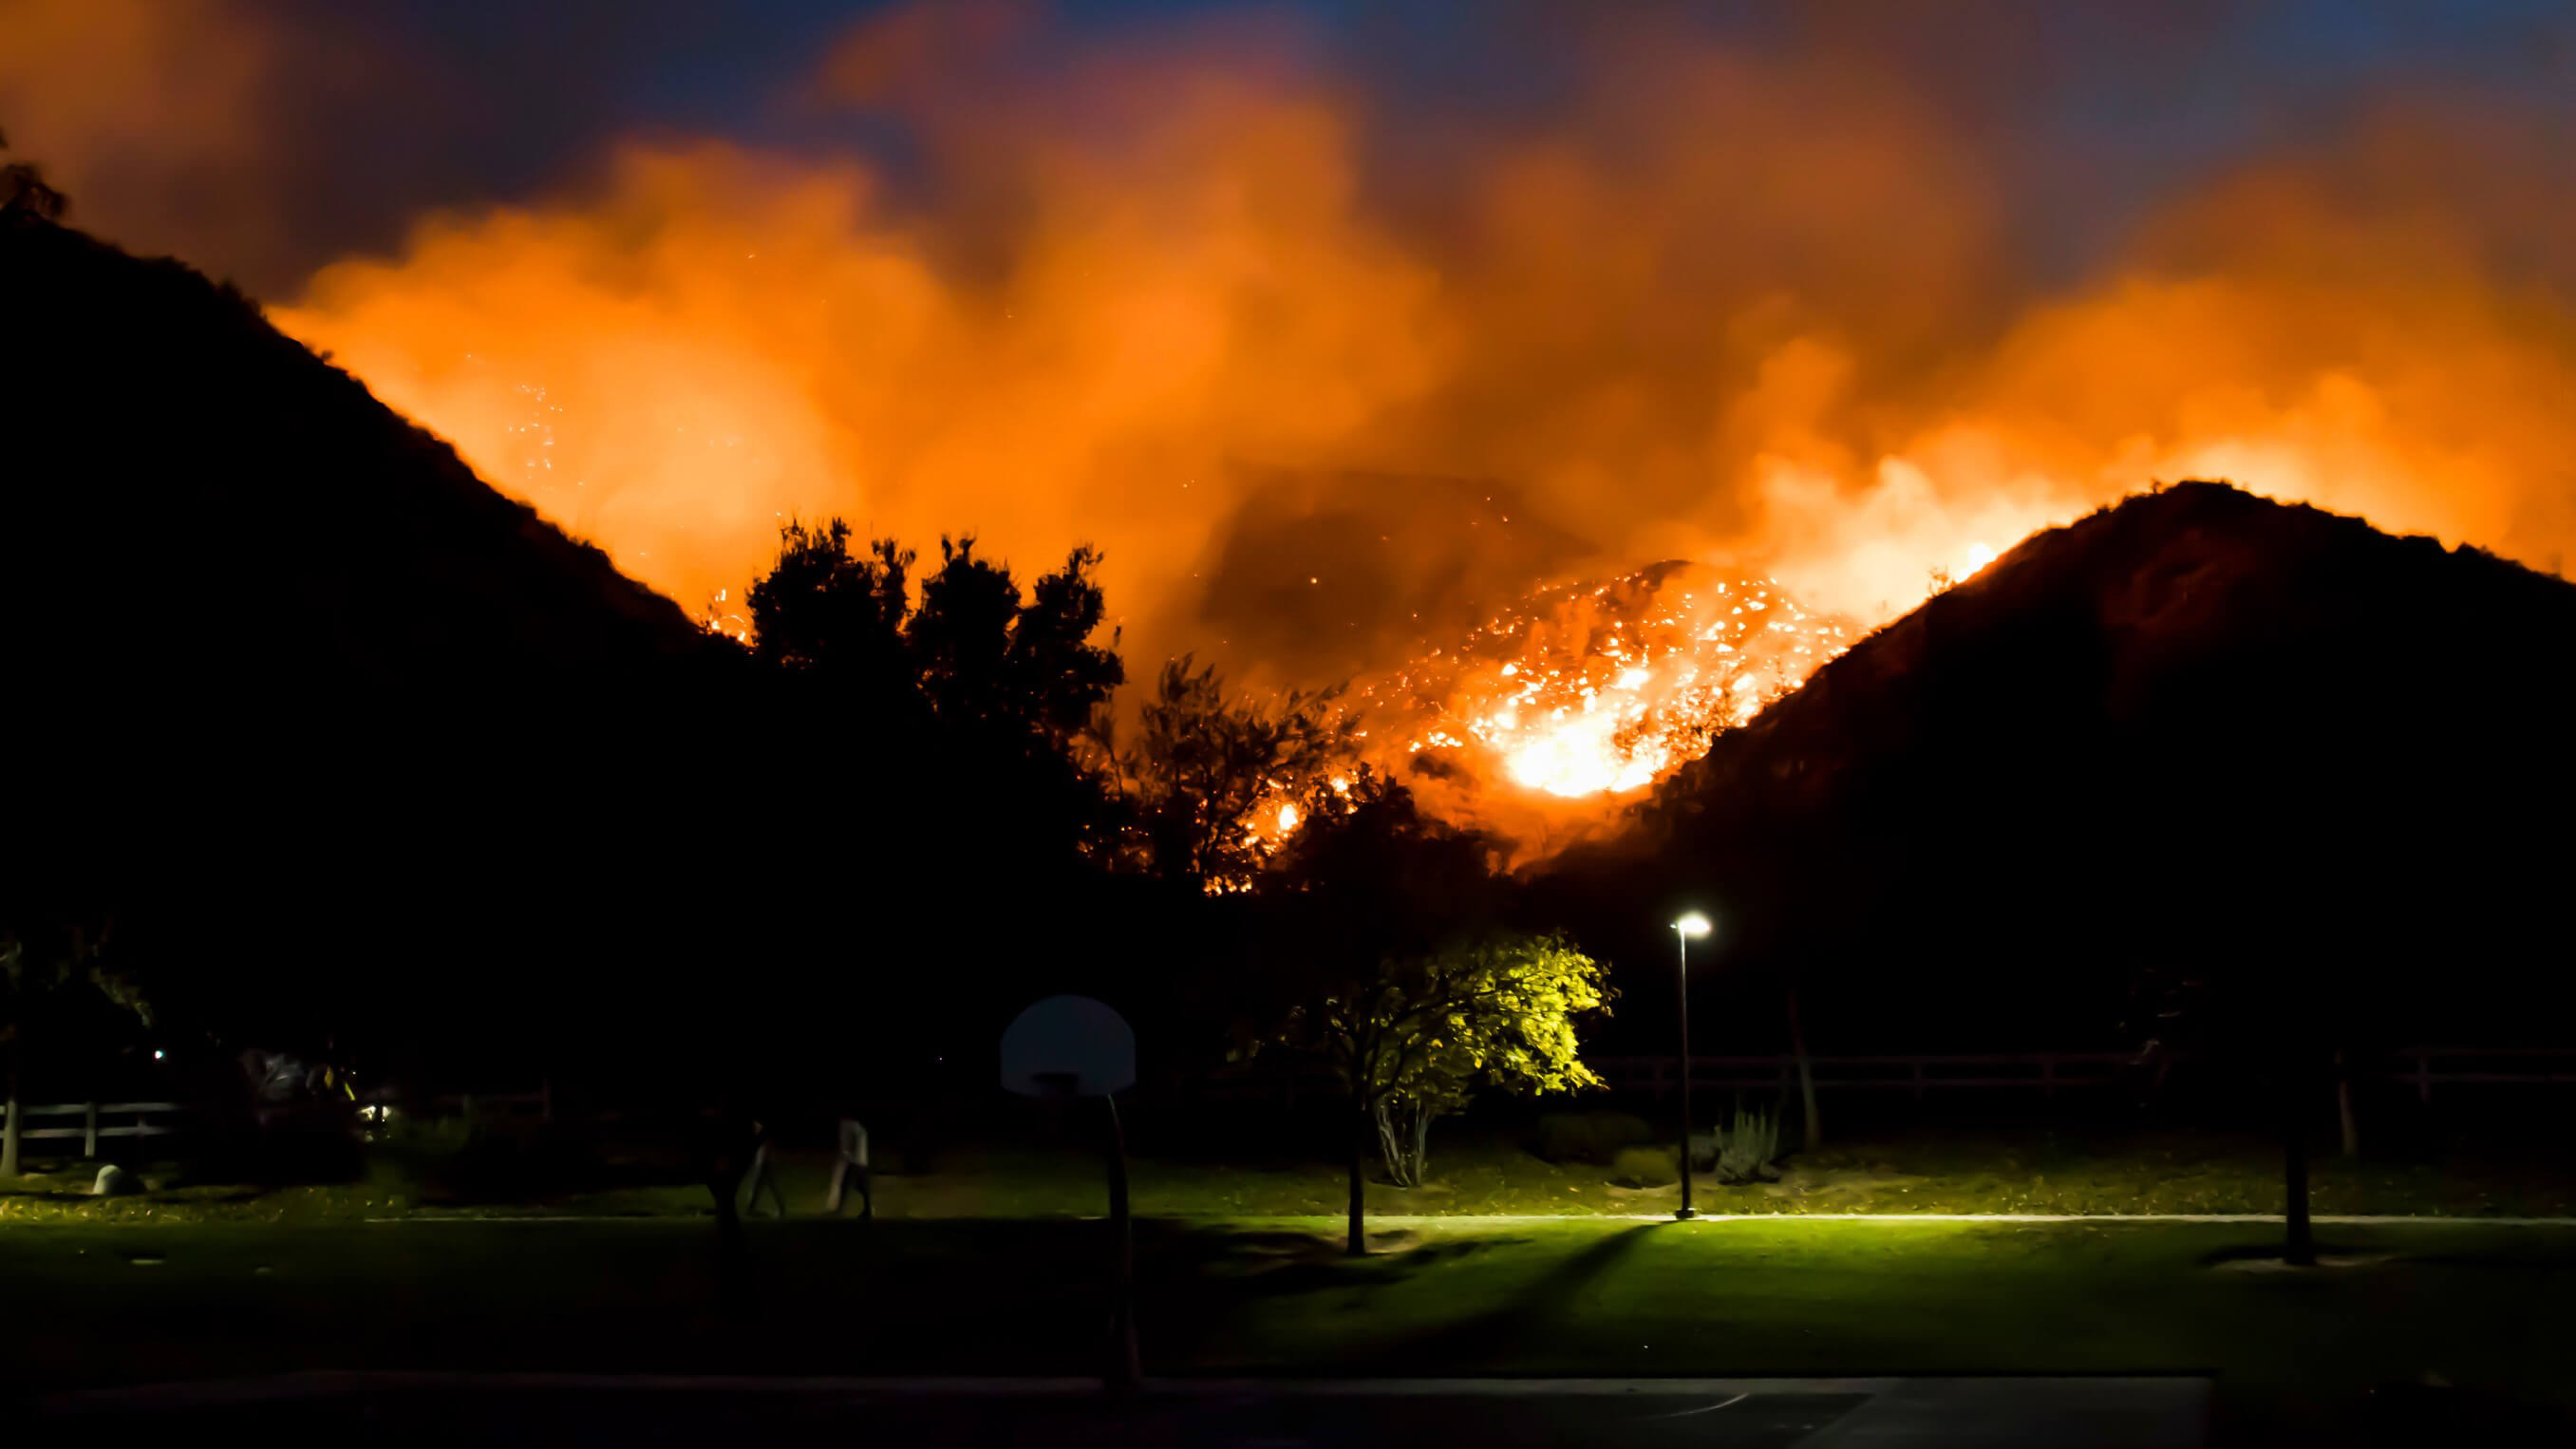 The 2021 Wildfire Season has Devastating Potential